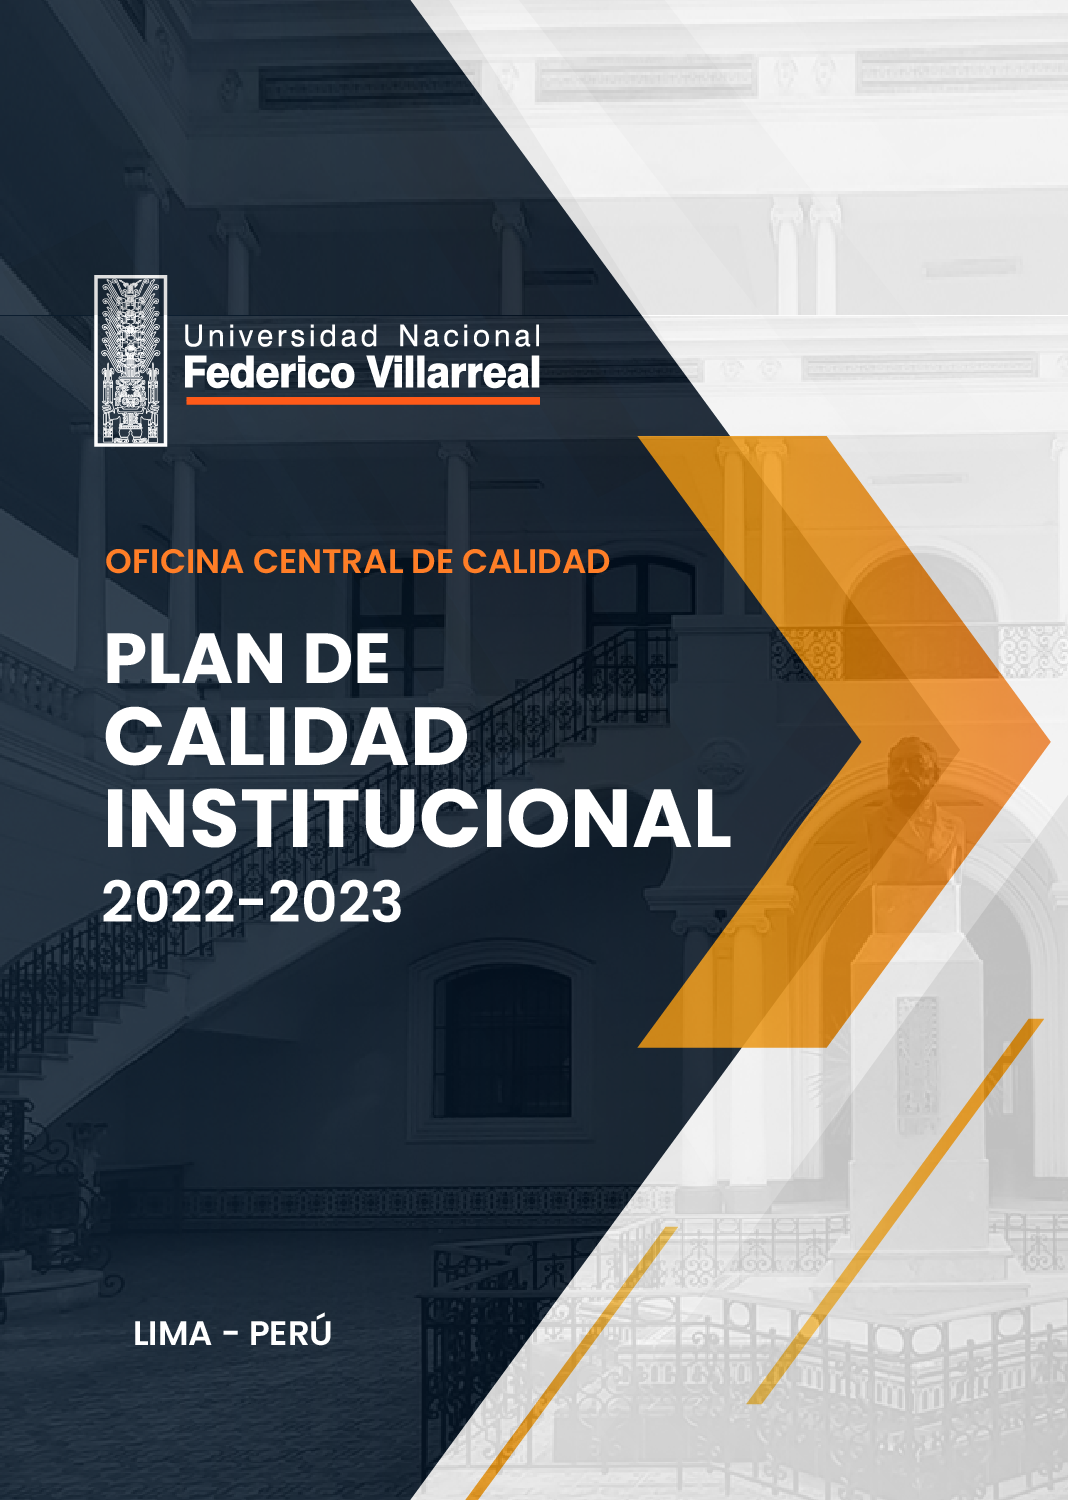 Plan de calidad institucional 2022-2023